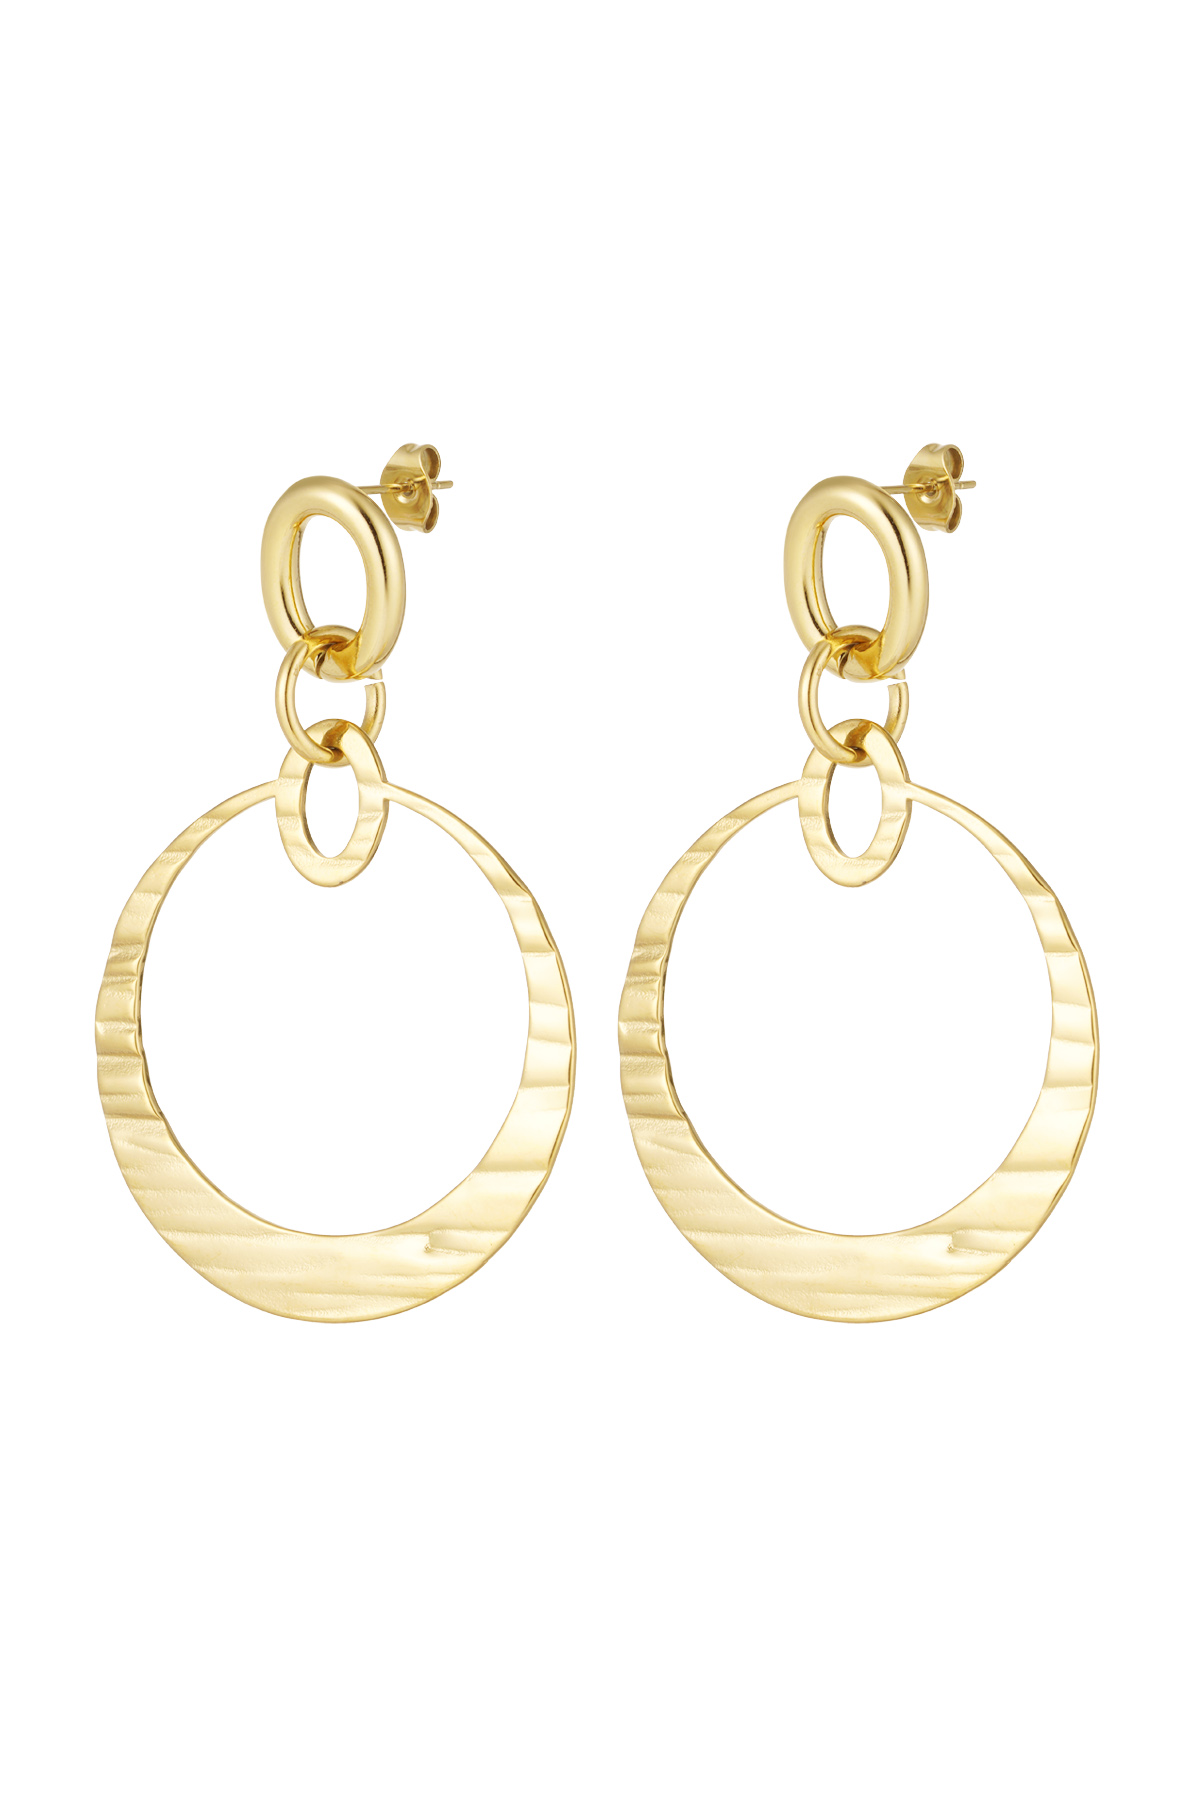 Earrings rings - gold 